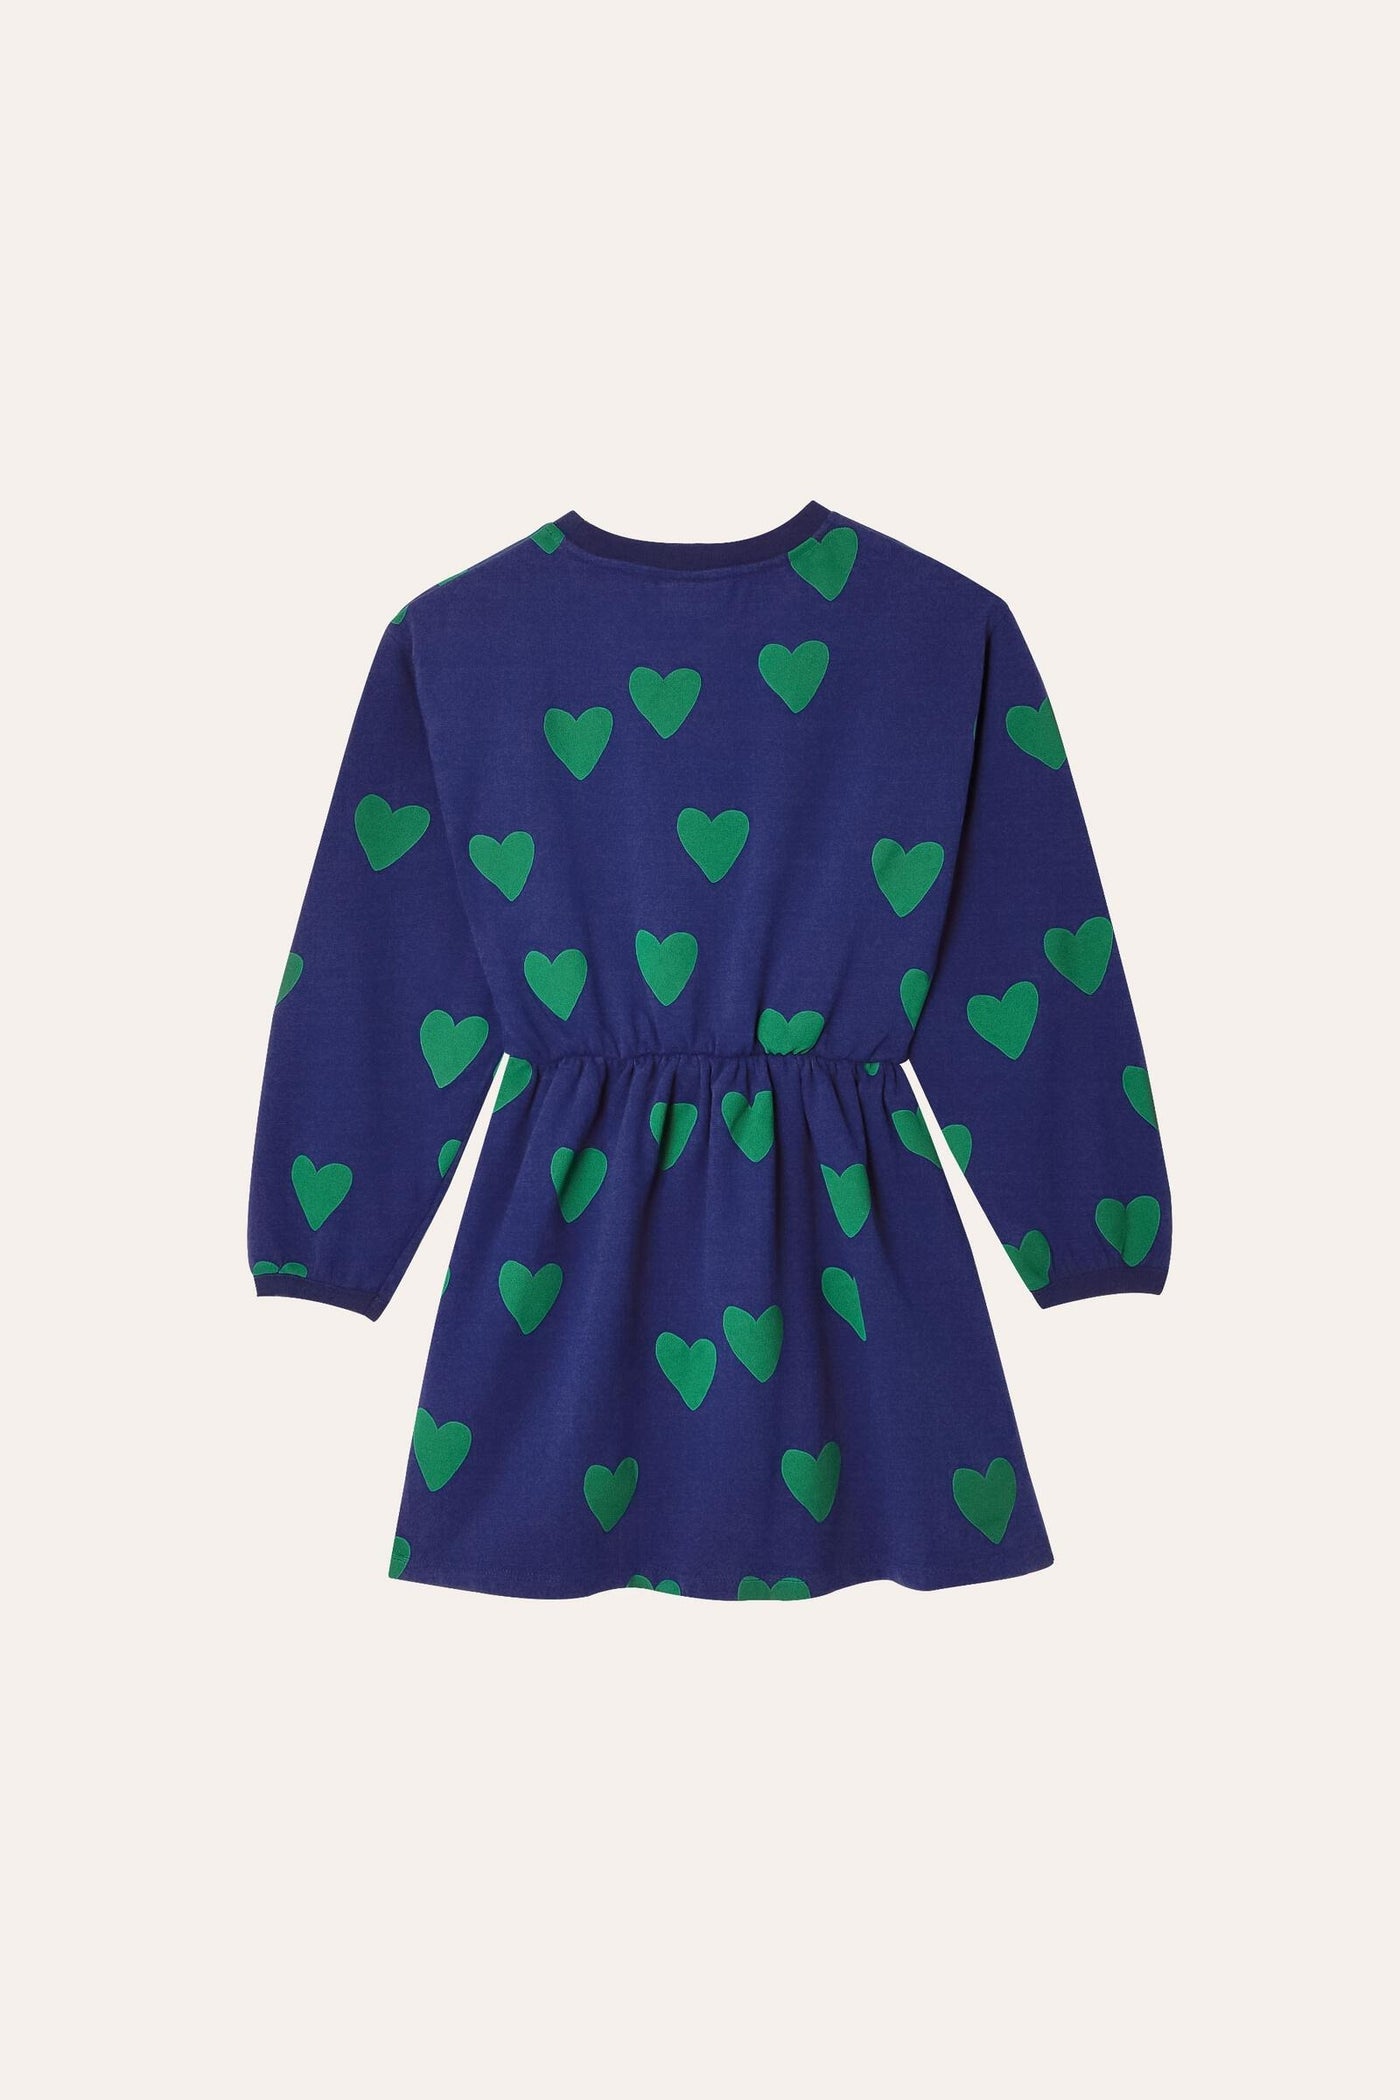 Green Hearts Long Sleeves Kids Dress